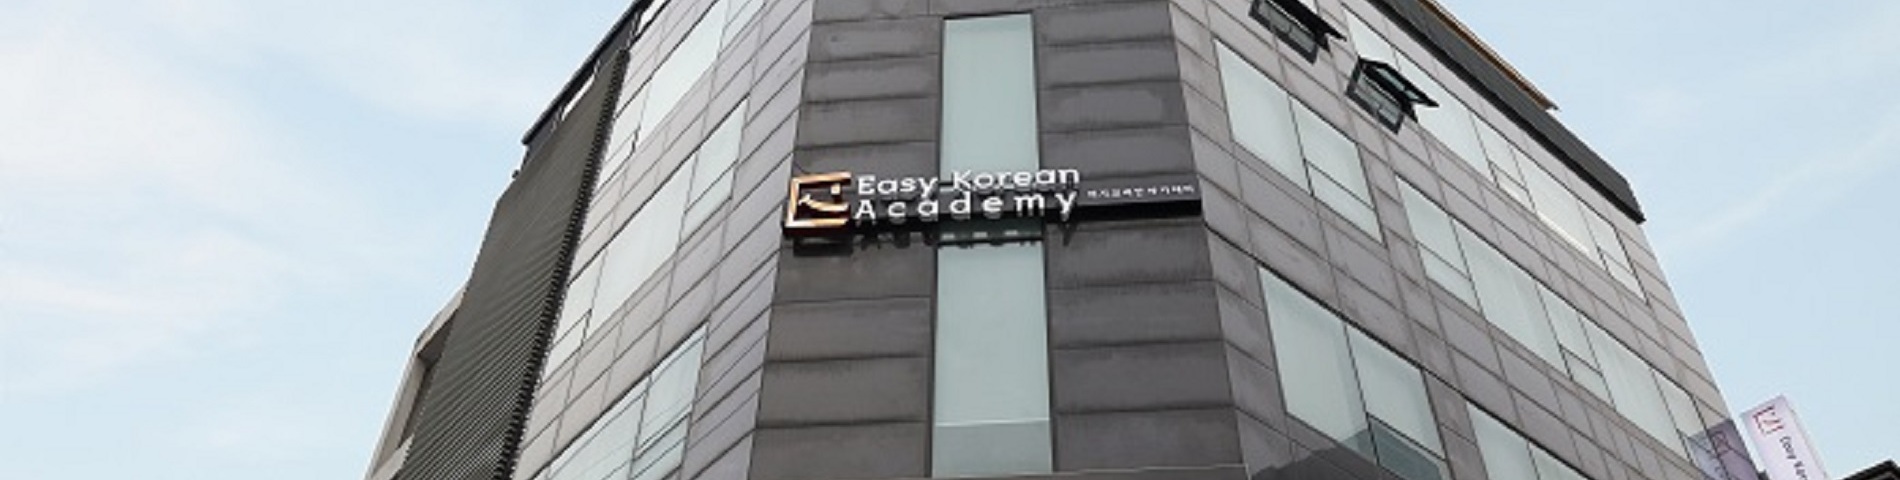 Easy Korean Academy bilde 1